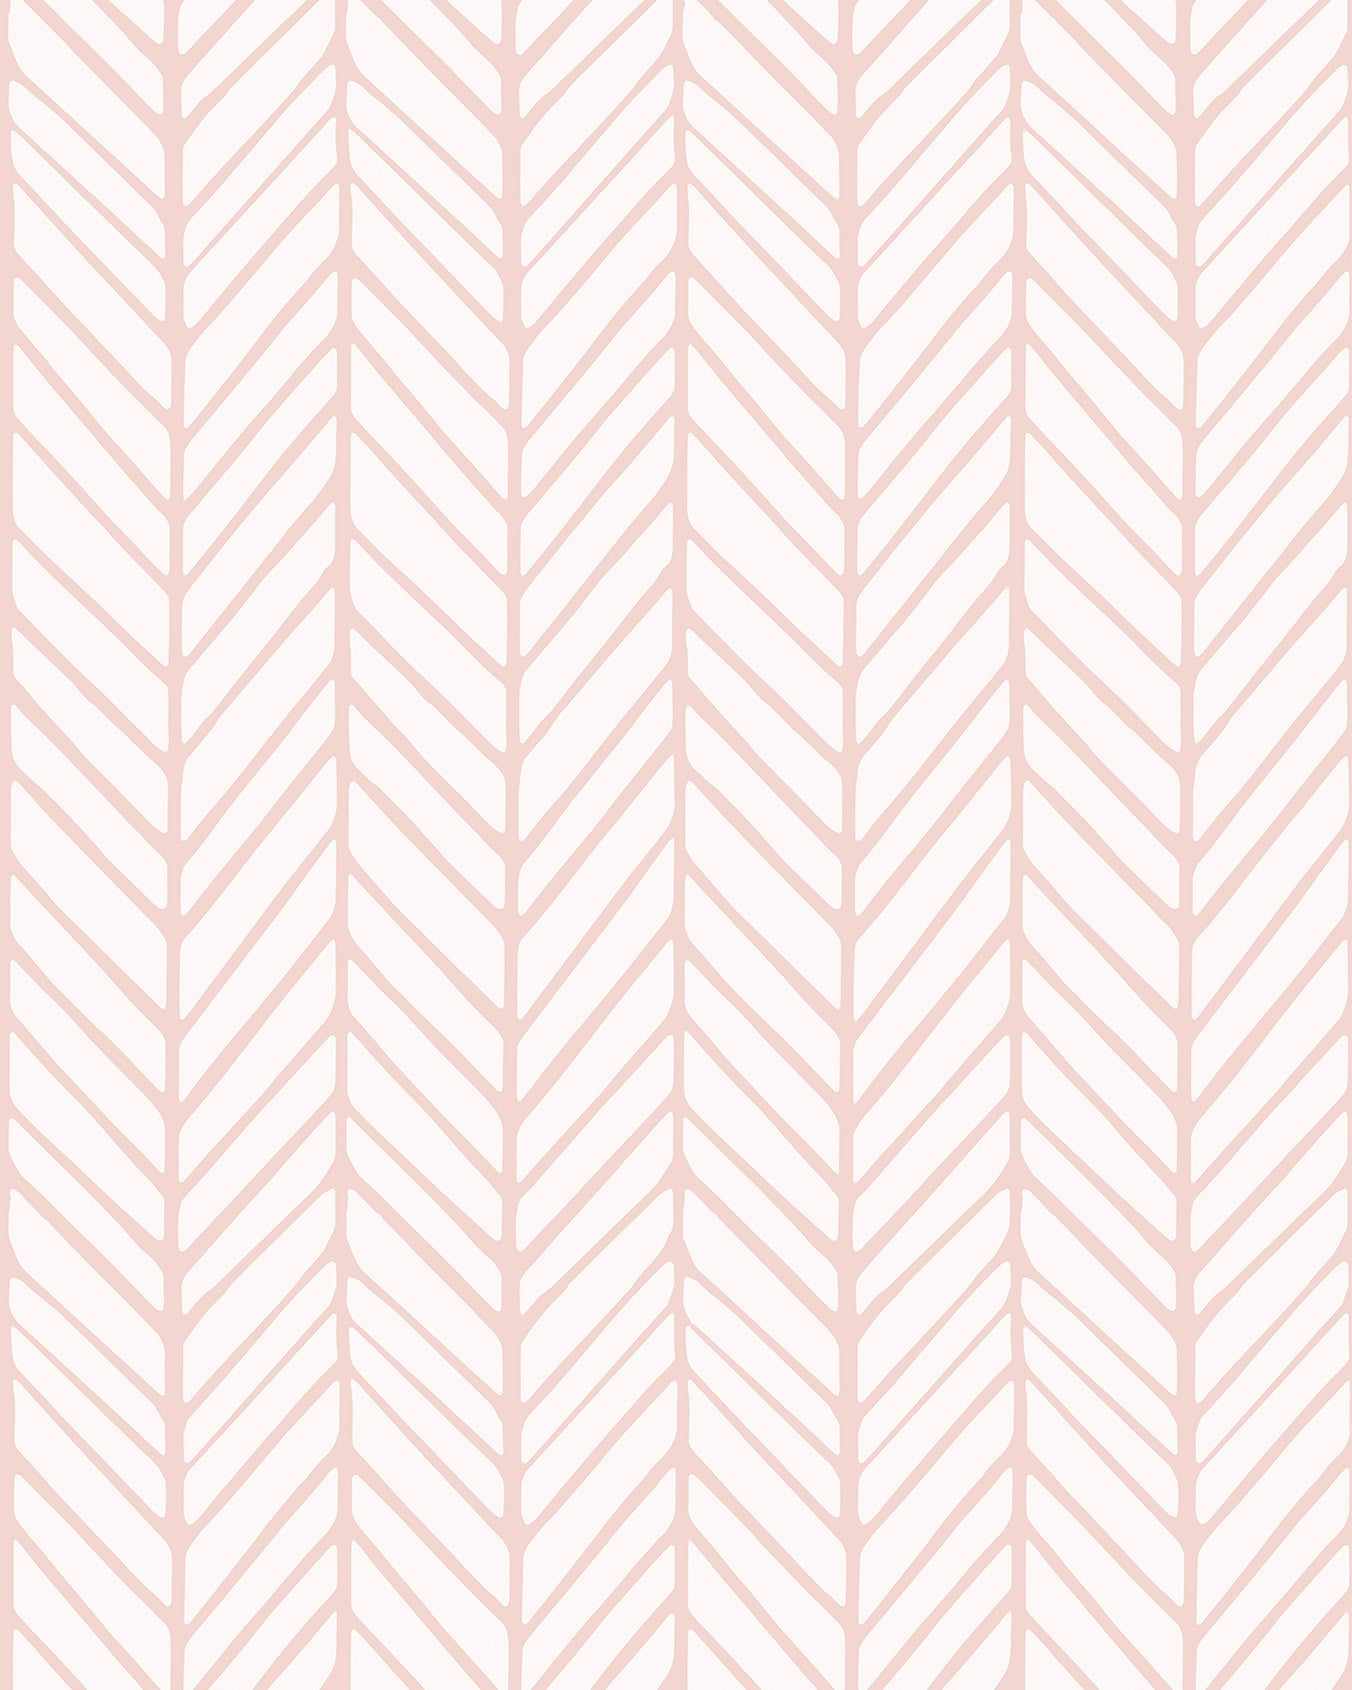 Zig Zag Chevron Black, Pink and White Tile Vector Pattern Stock Vector -  Illustration of graphic, design: 89161319